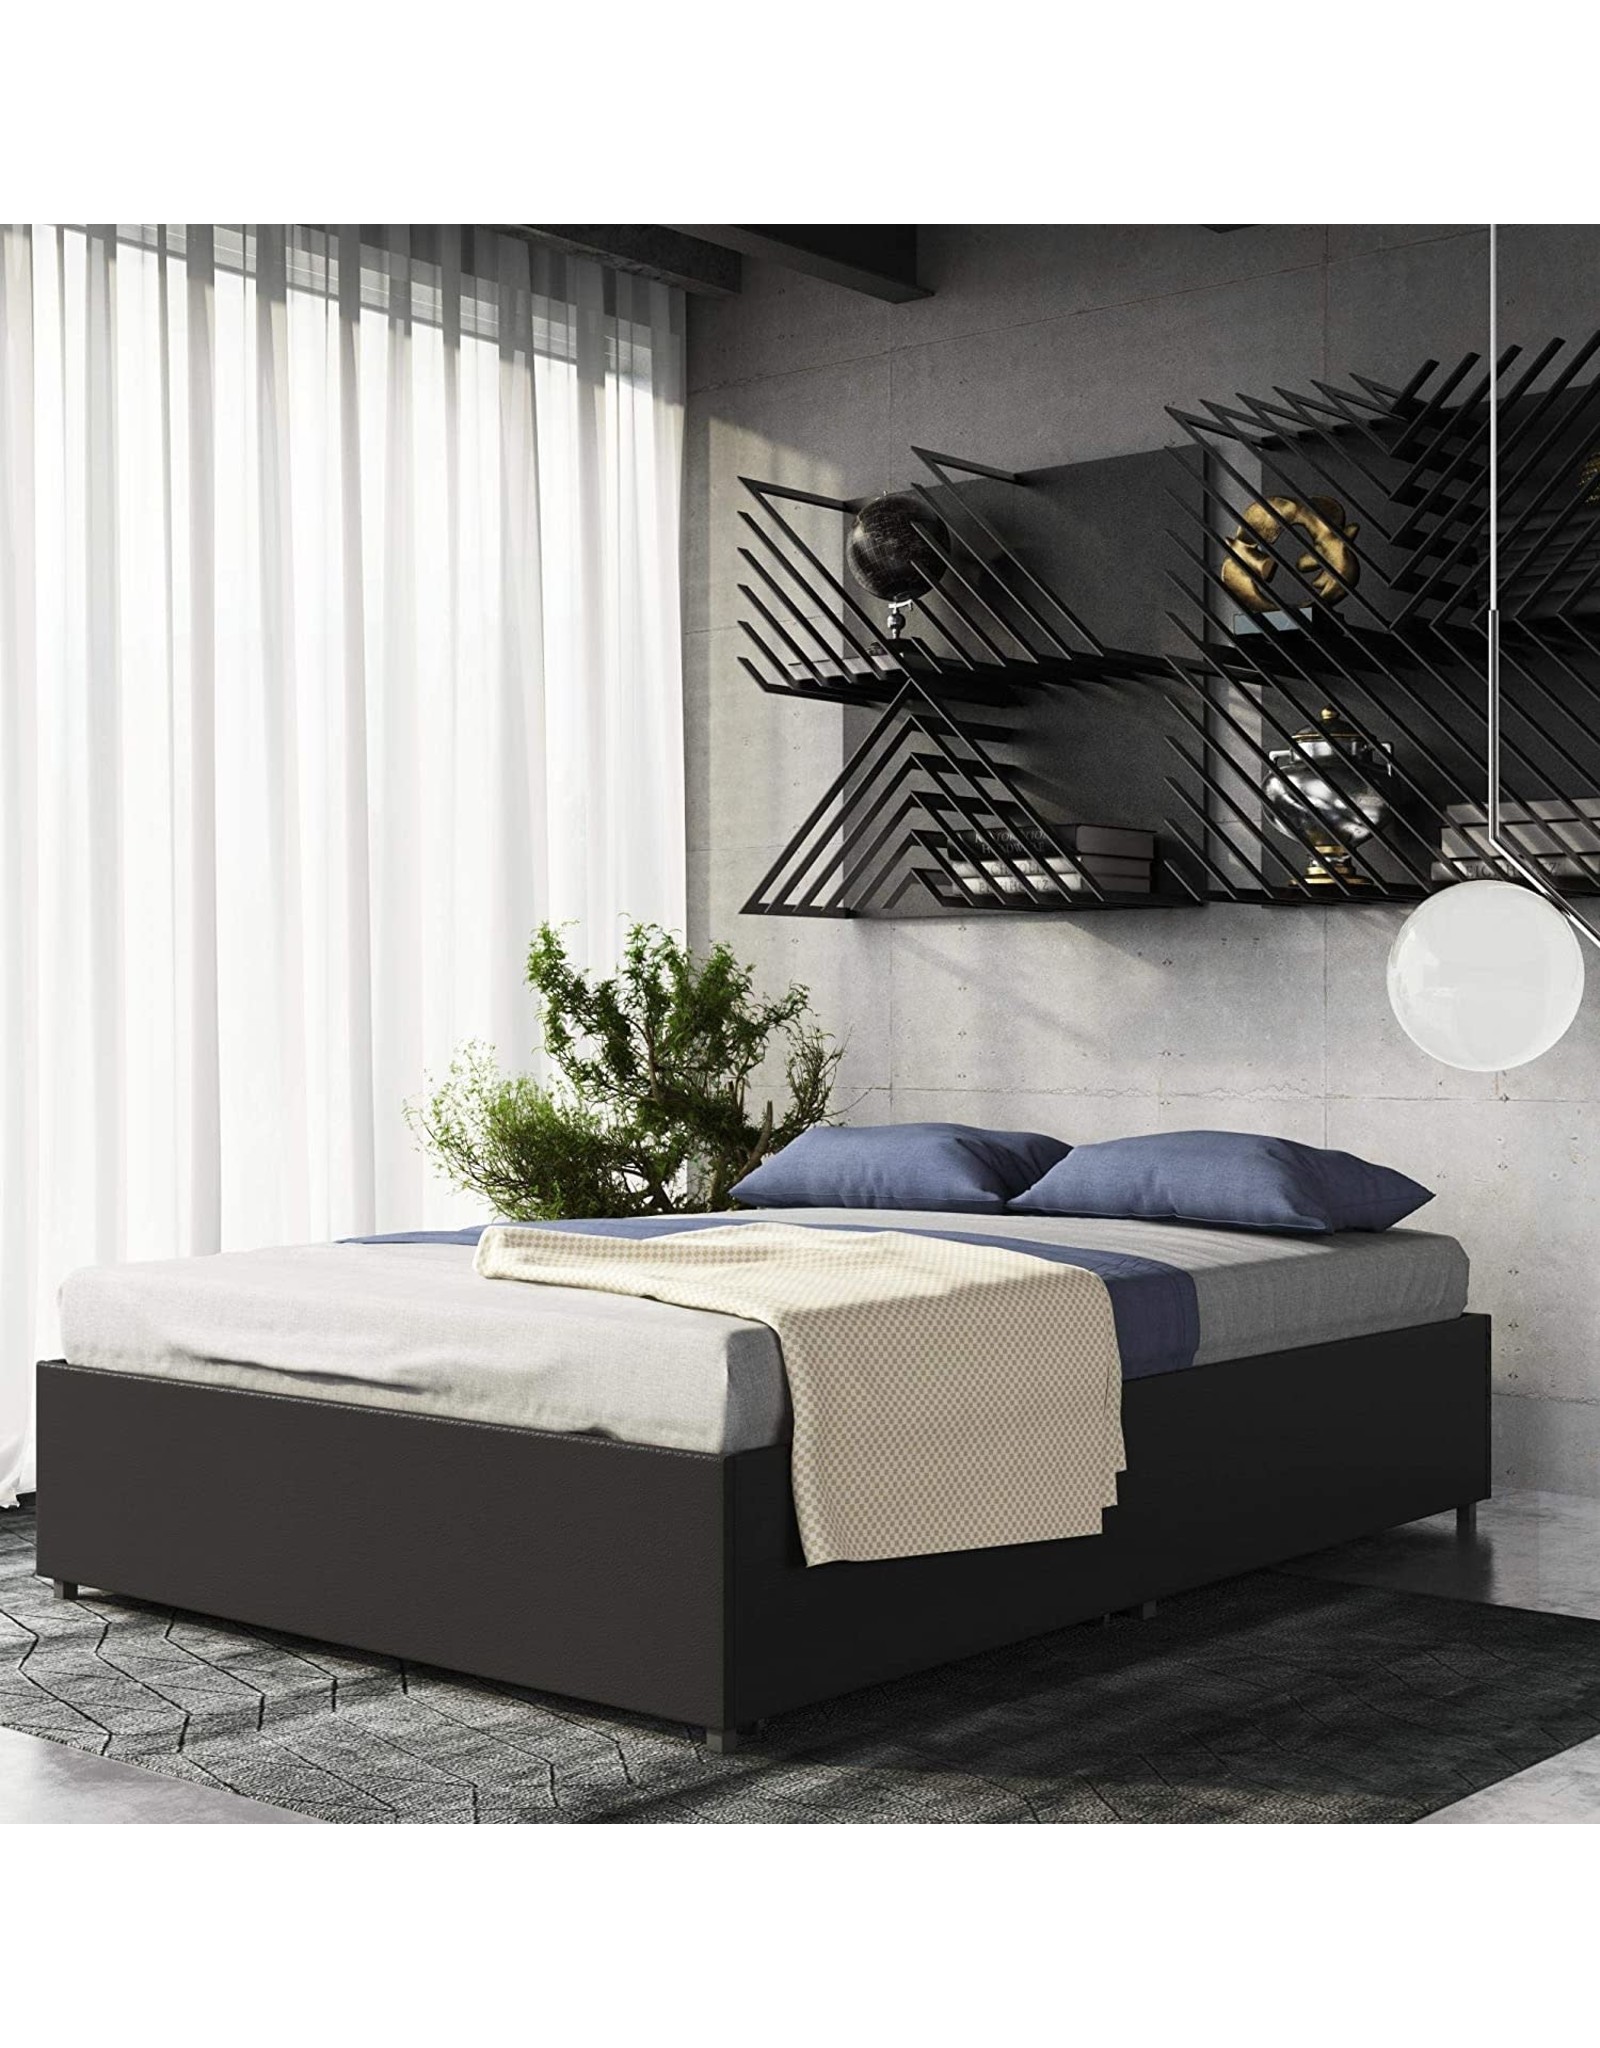 DHP Maven Upholstered Storage Bed, King, Black Faux Leather 